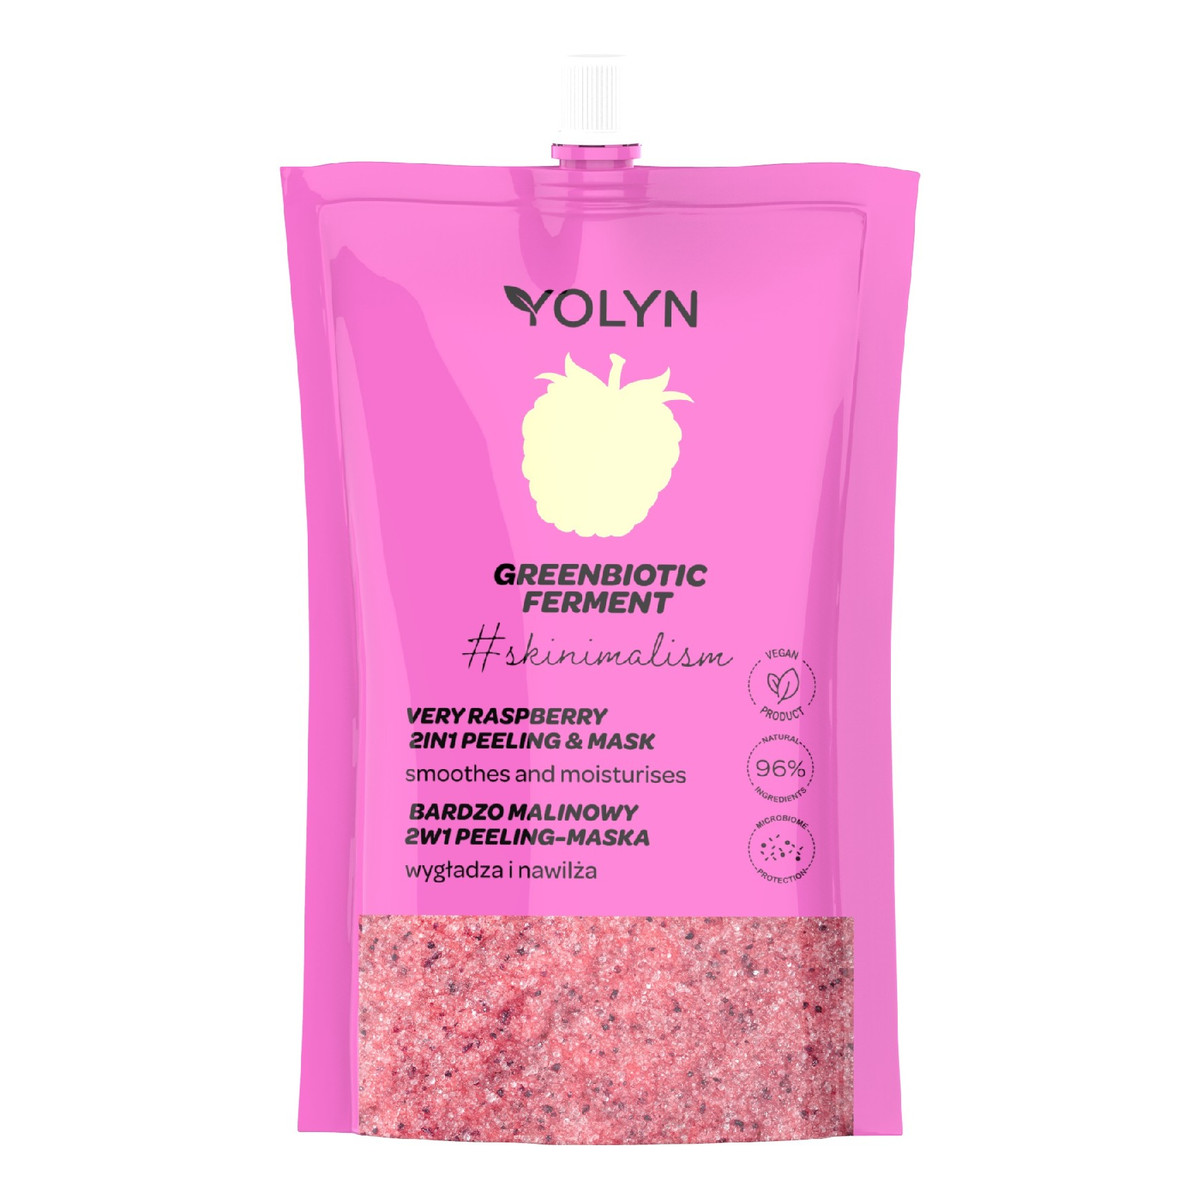 Yolyn Greenbiotic Ferment Bardzo Malinowy Peeling-maska 2w1 50ml